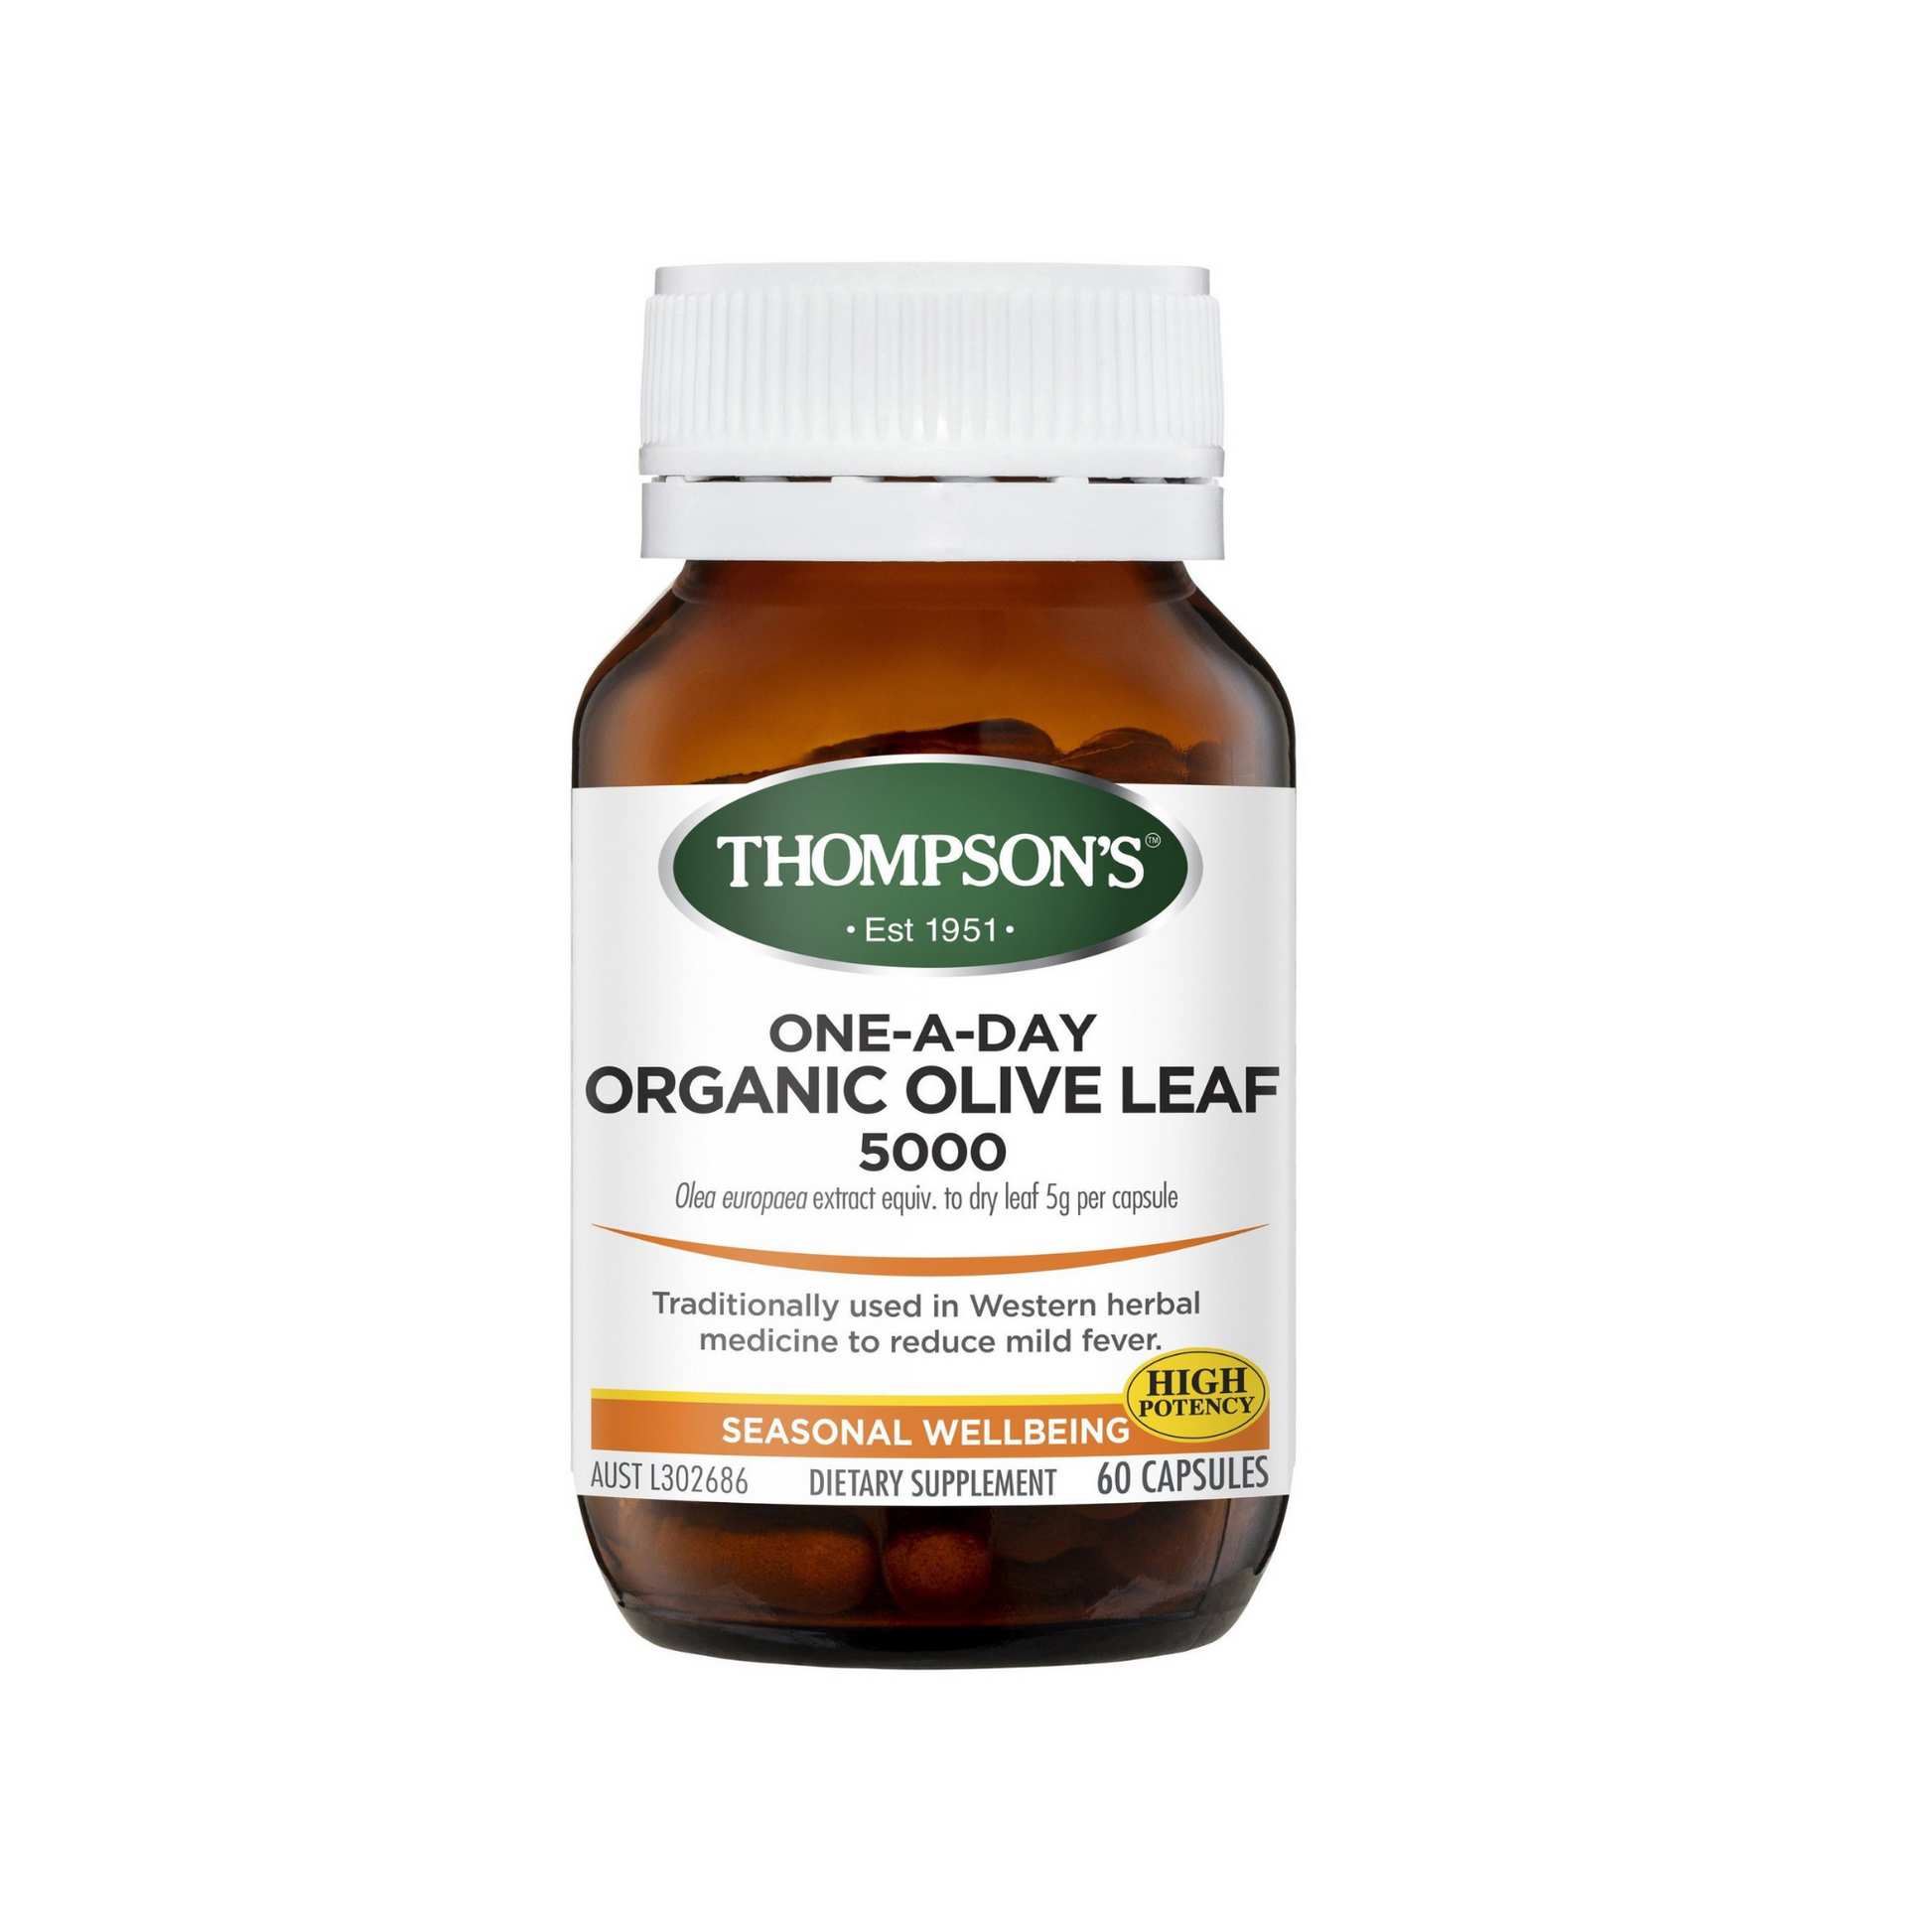 Thompsons One-A-Day Organic Olive Leaf 5000mg 60 Capsules